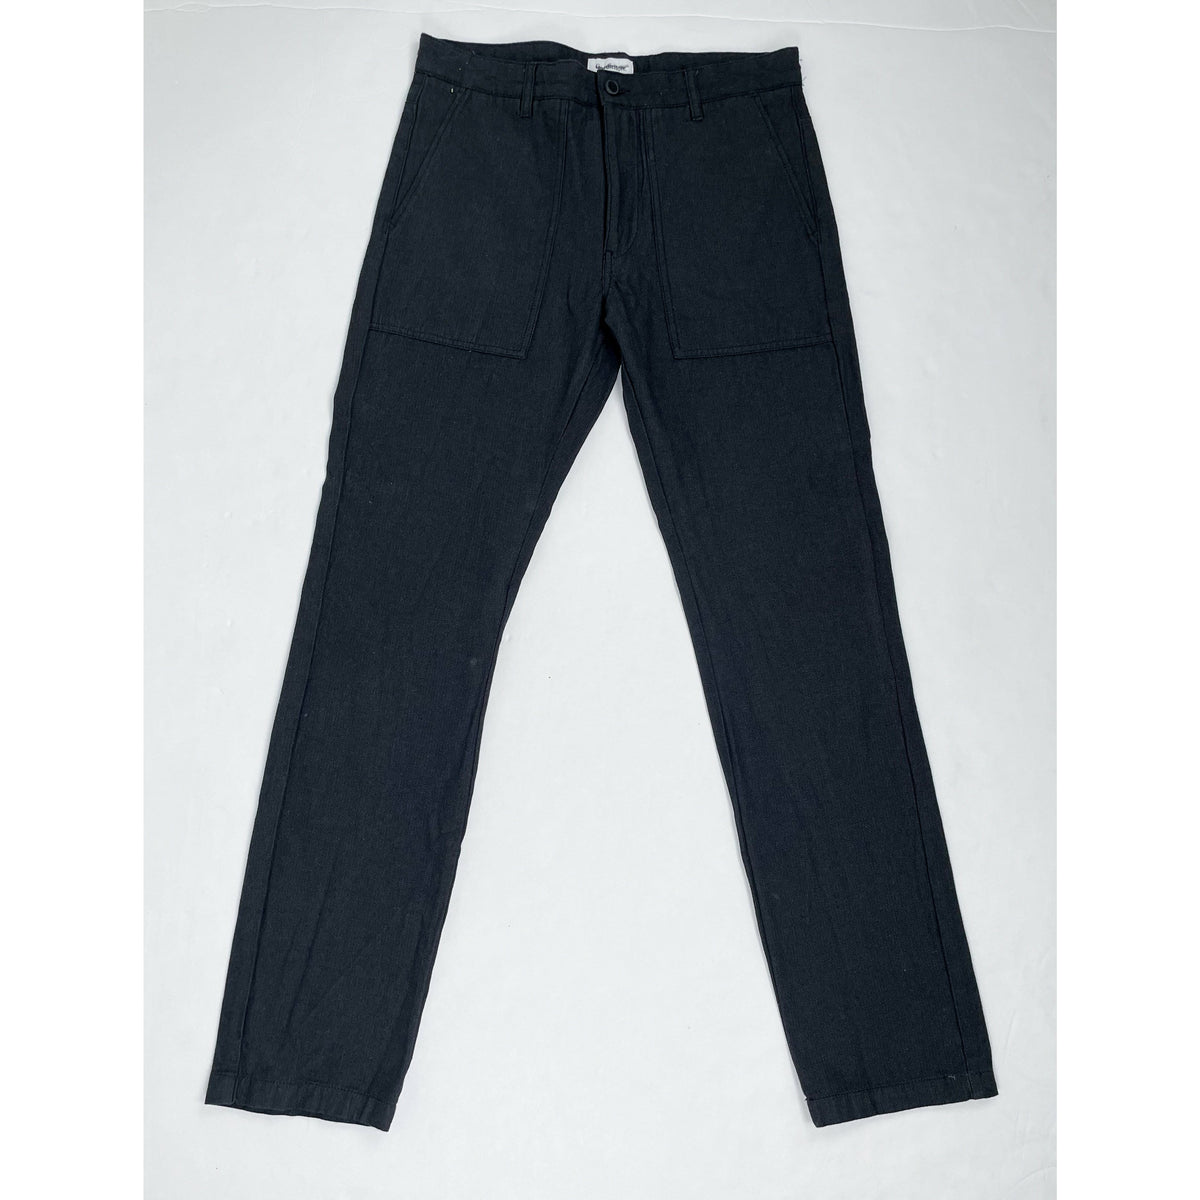 Goodfellow Black Pants - Dress Pants